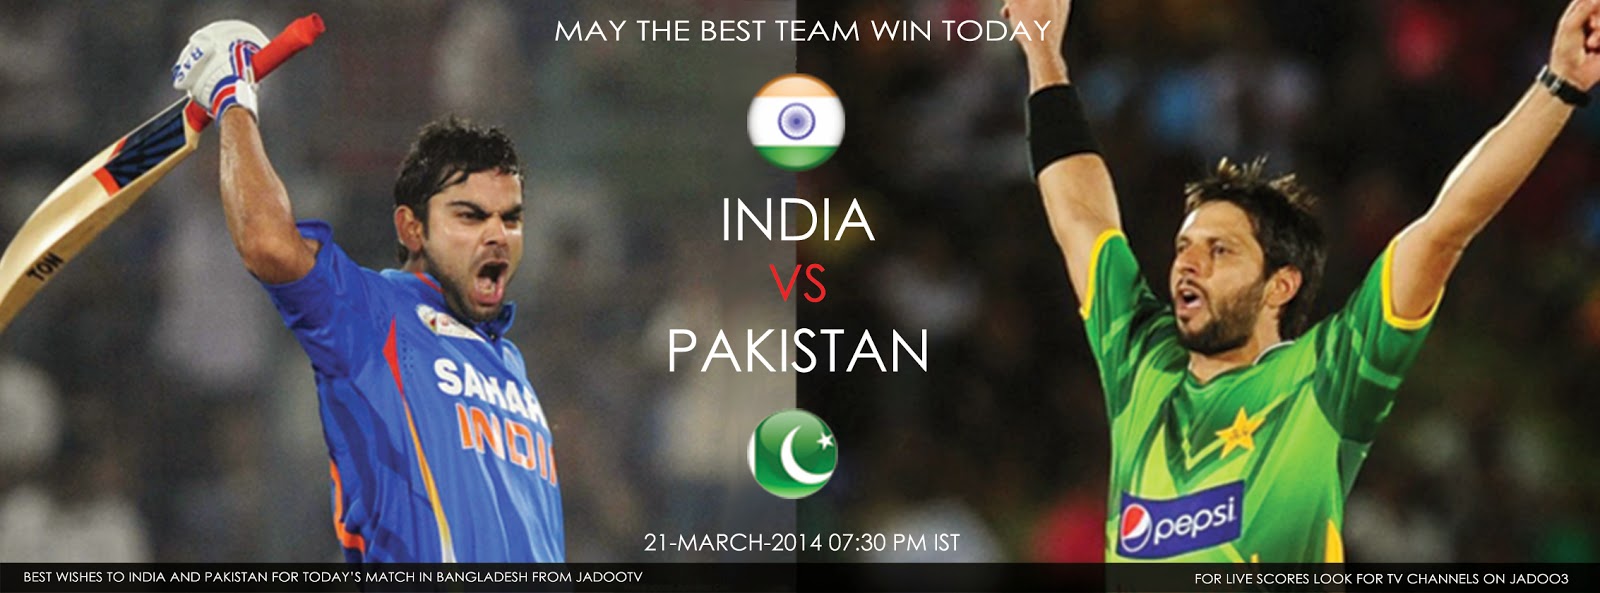 india vs pakistan t20 jadootv wishes